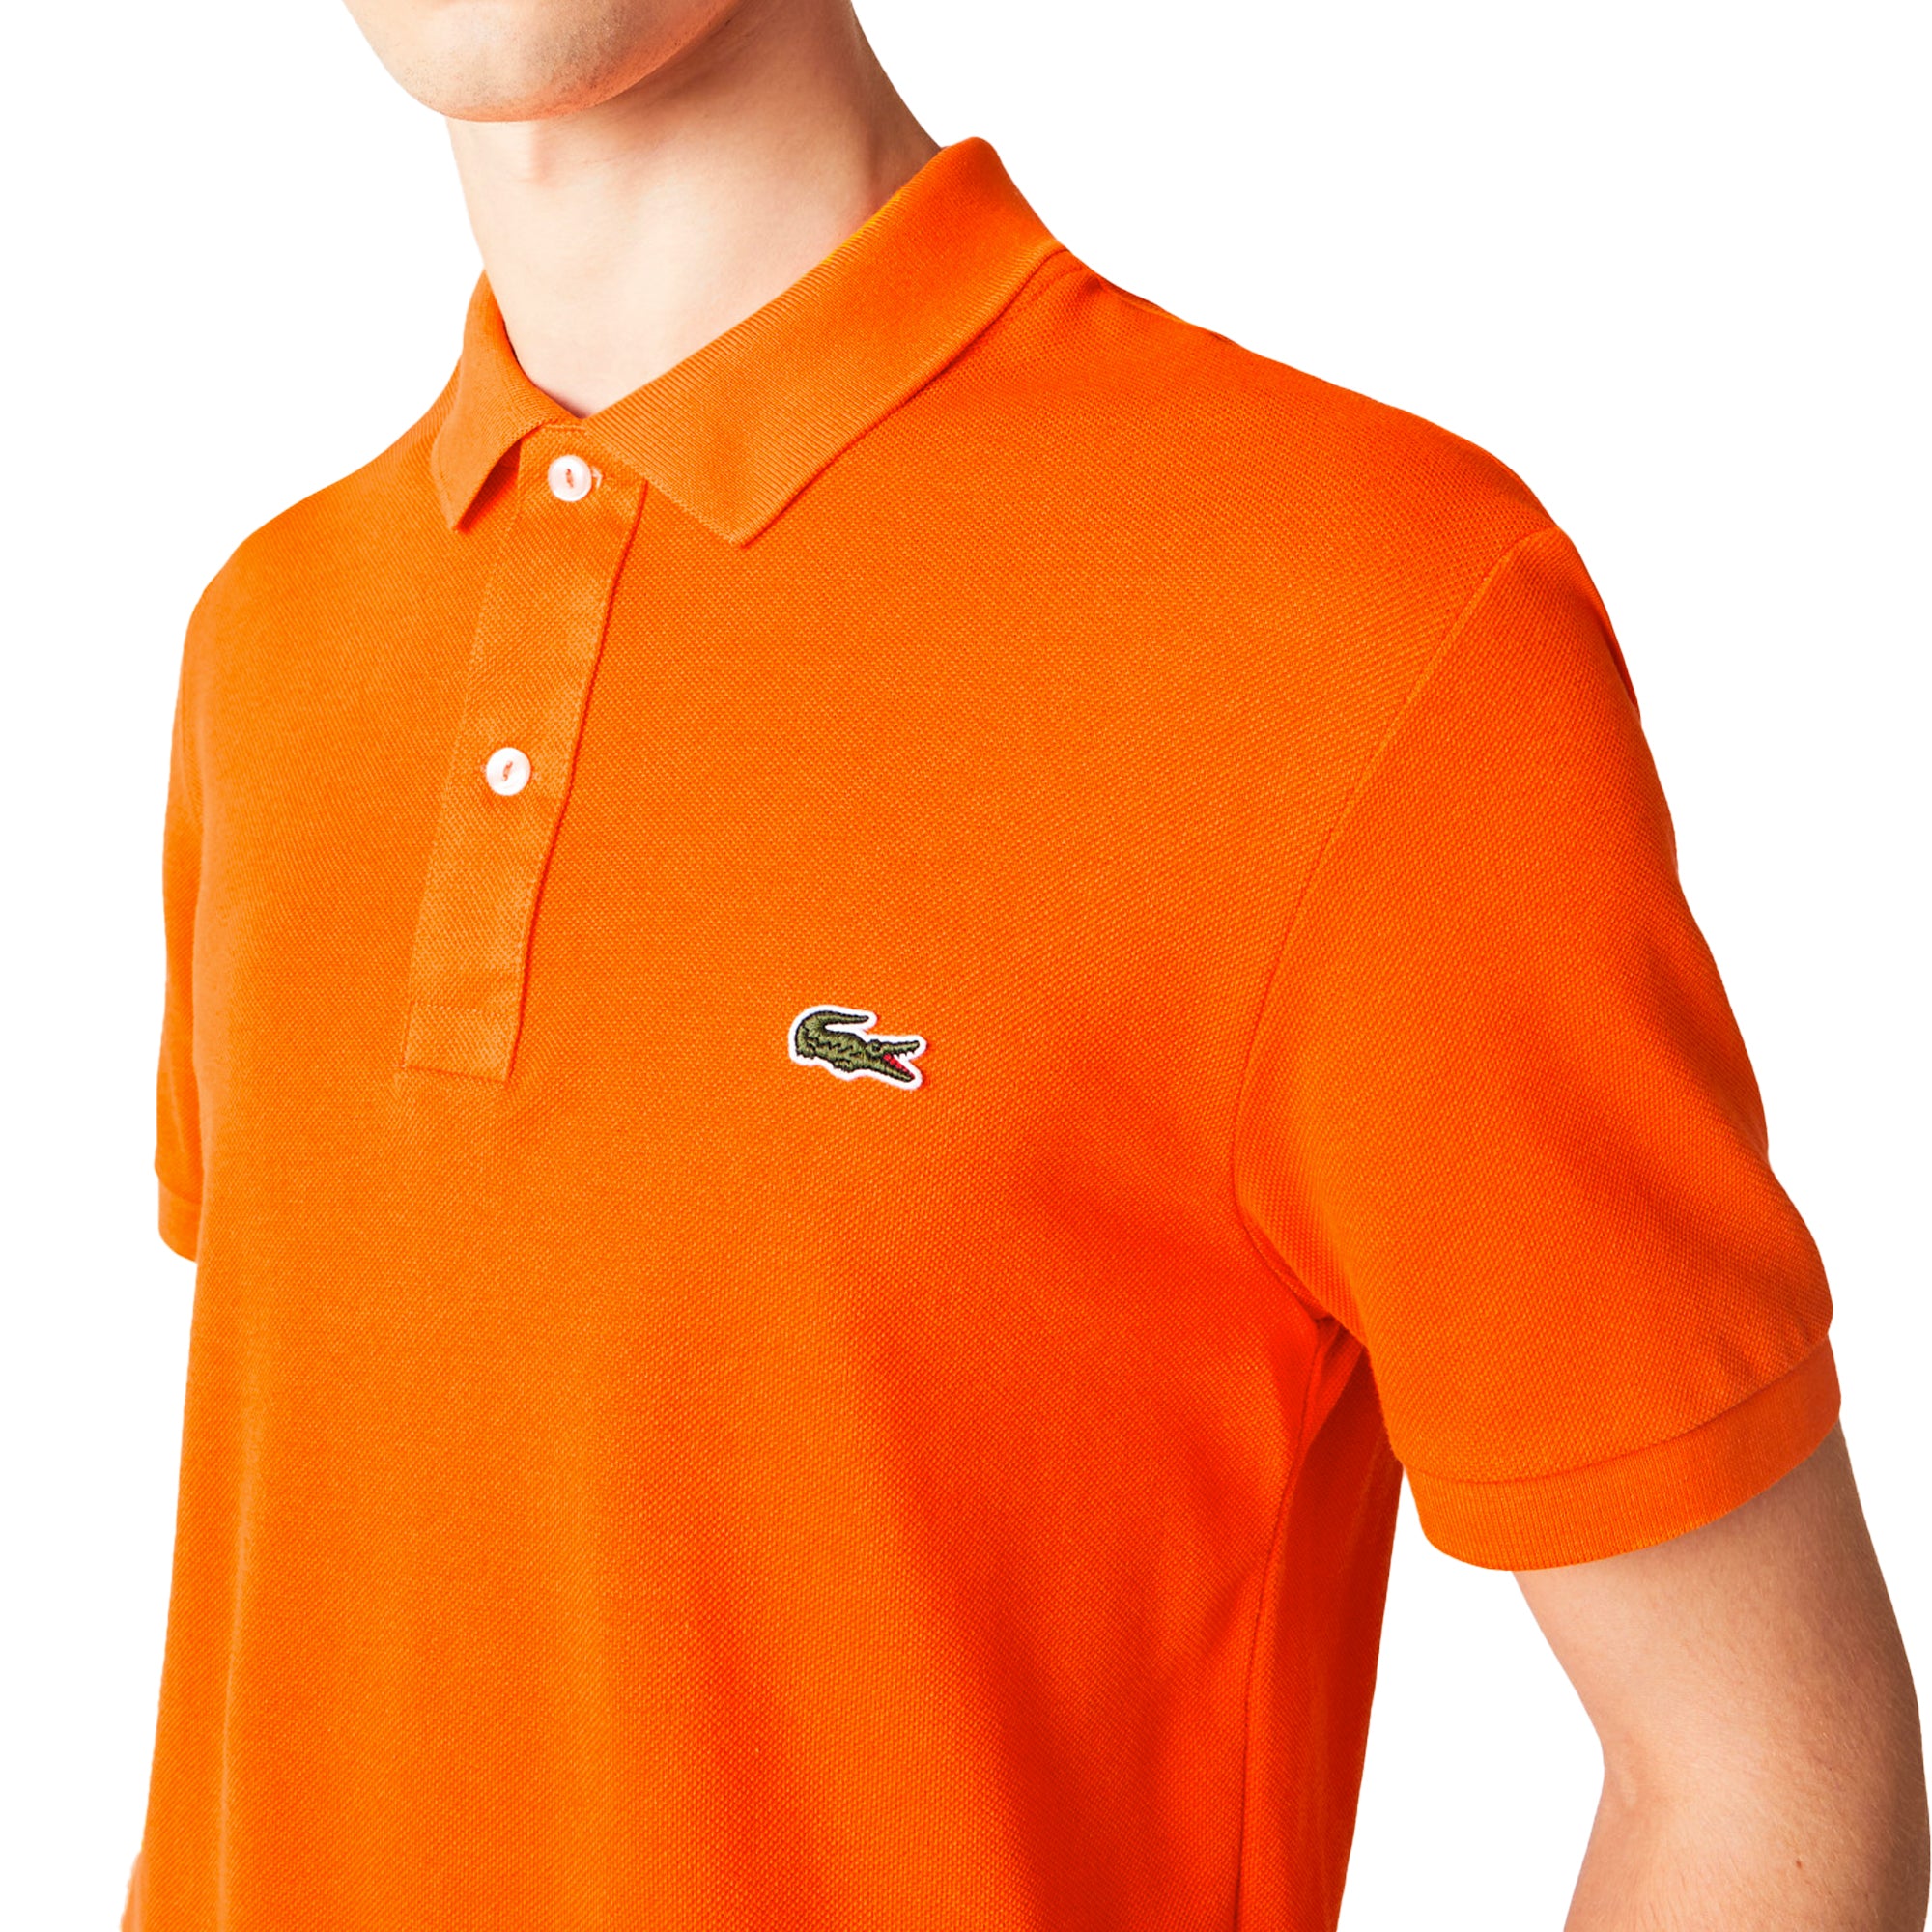 Lacoste Short Sleeved Slim Fit Polo PH4012 - Celosia Orange